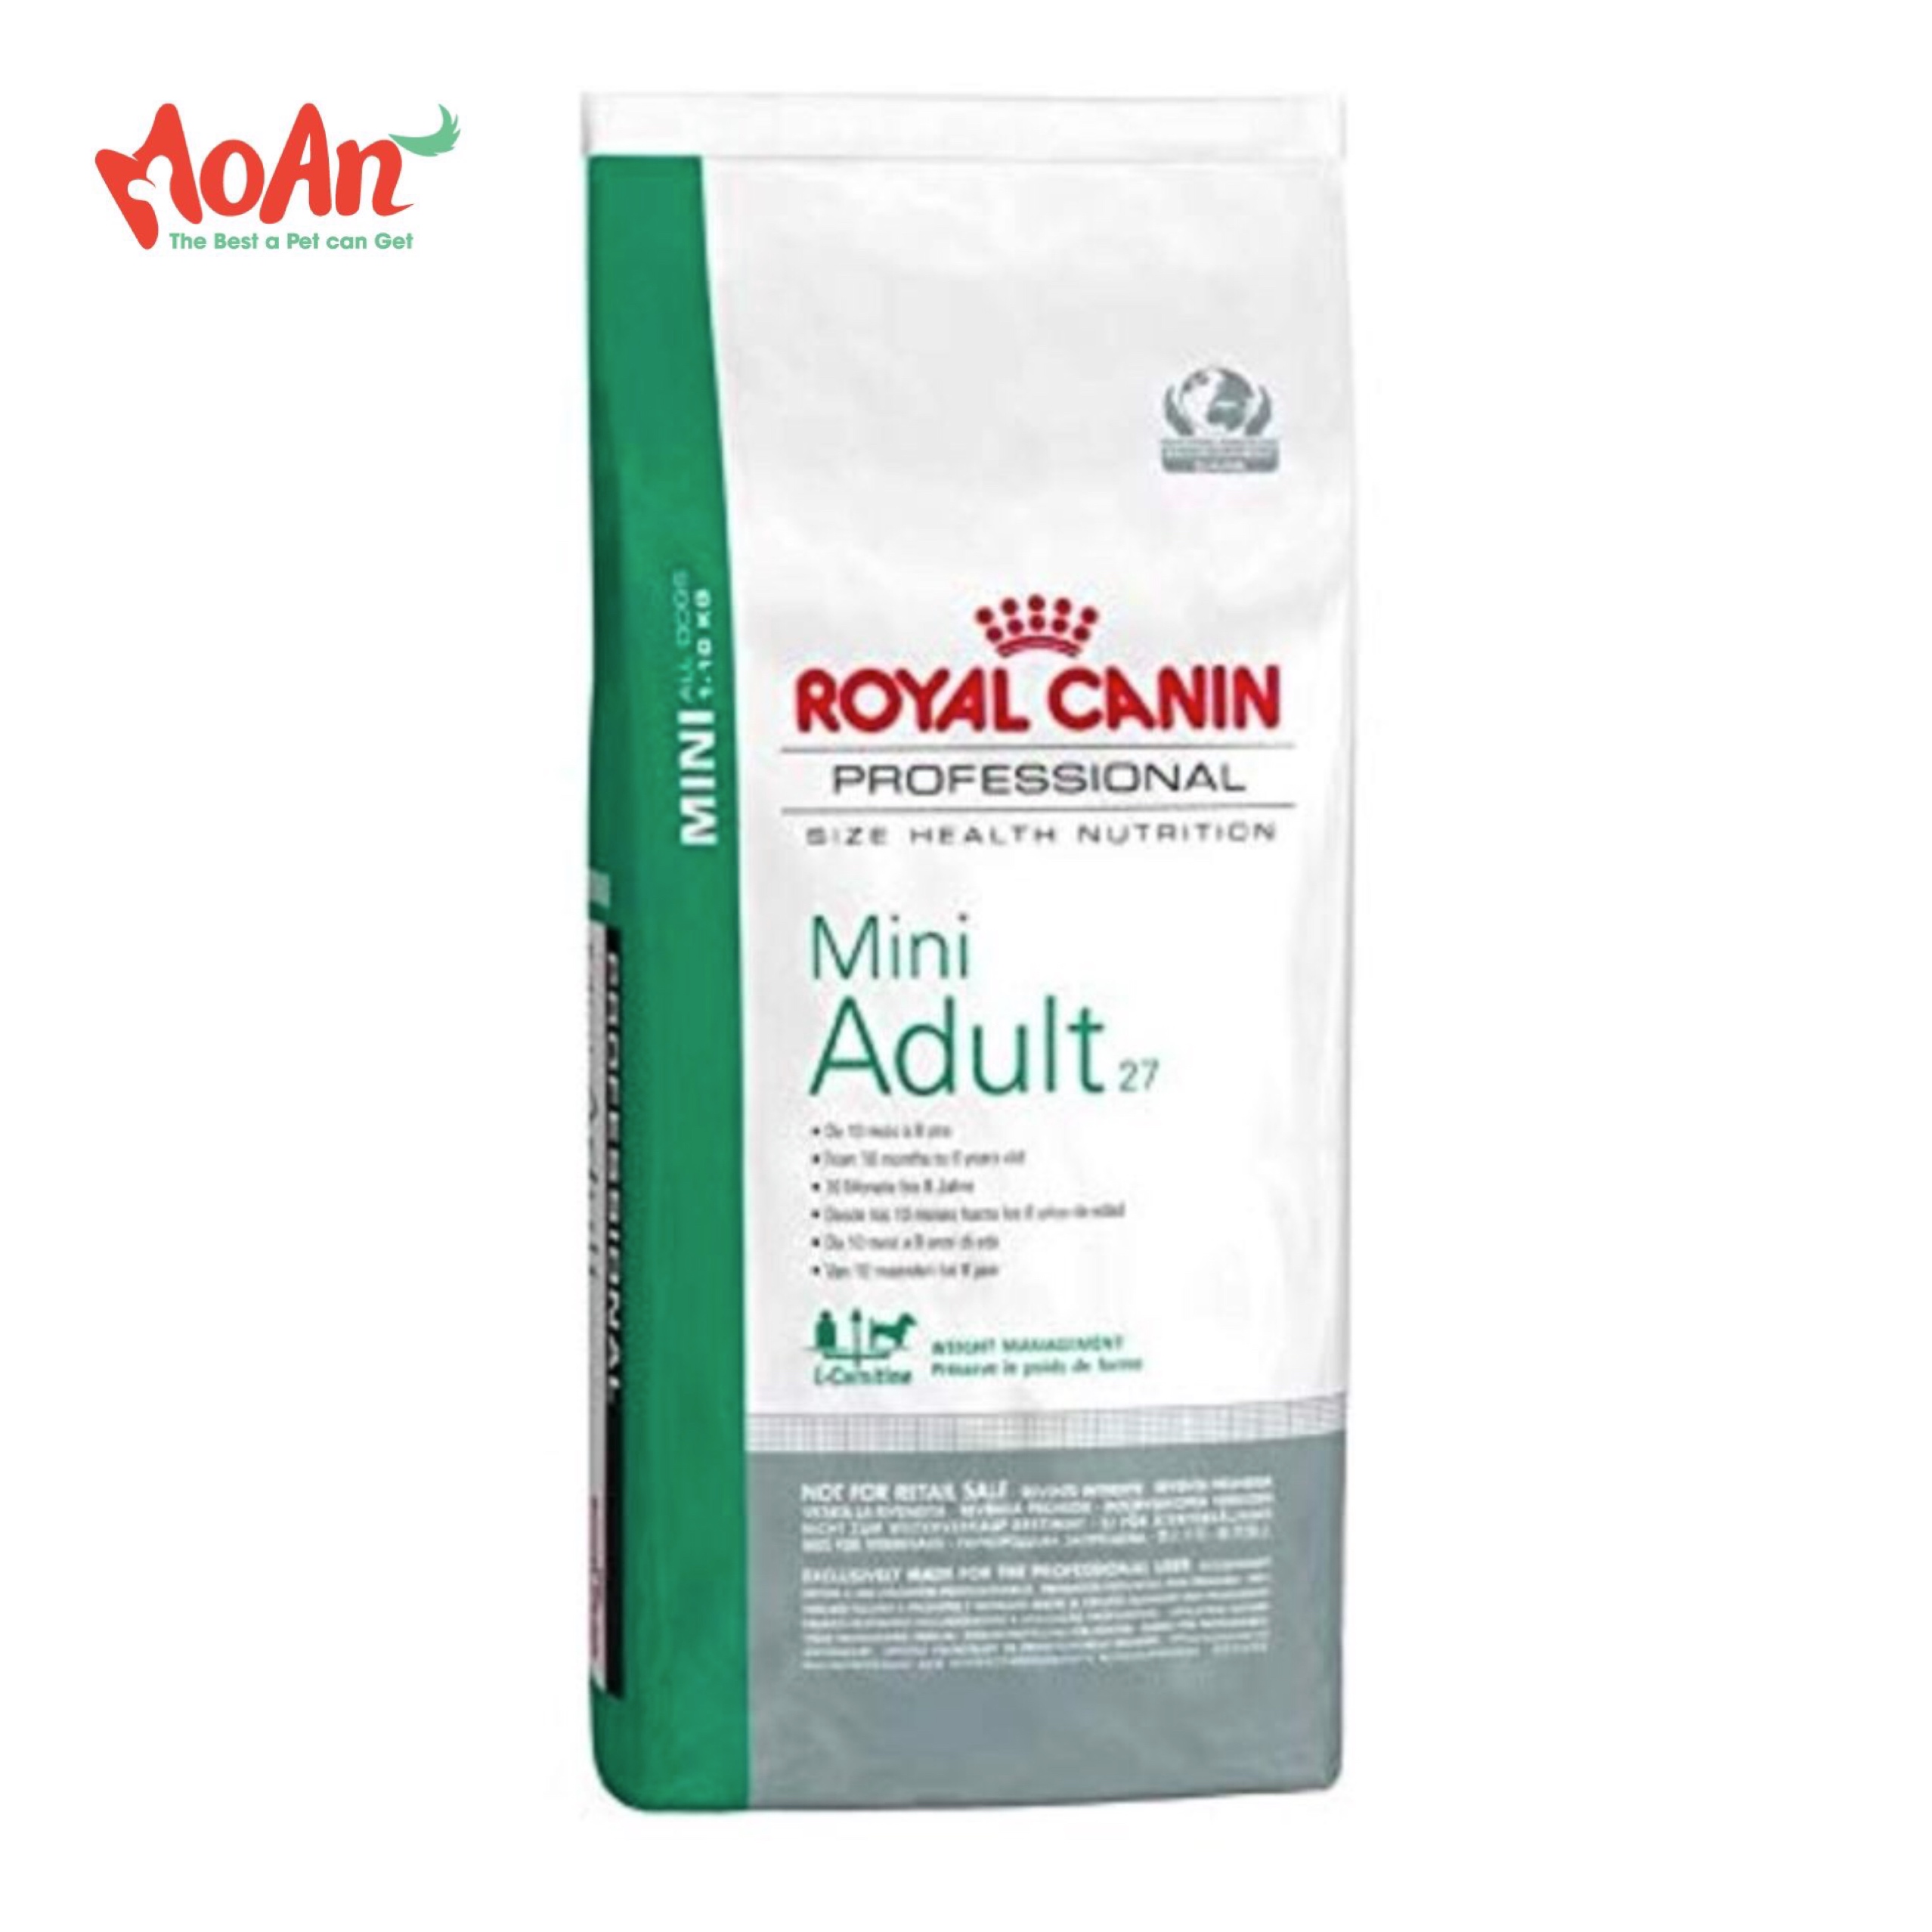 ROYAL CANIN MINI ADULT 15kg